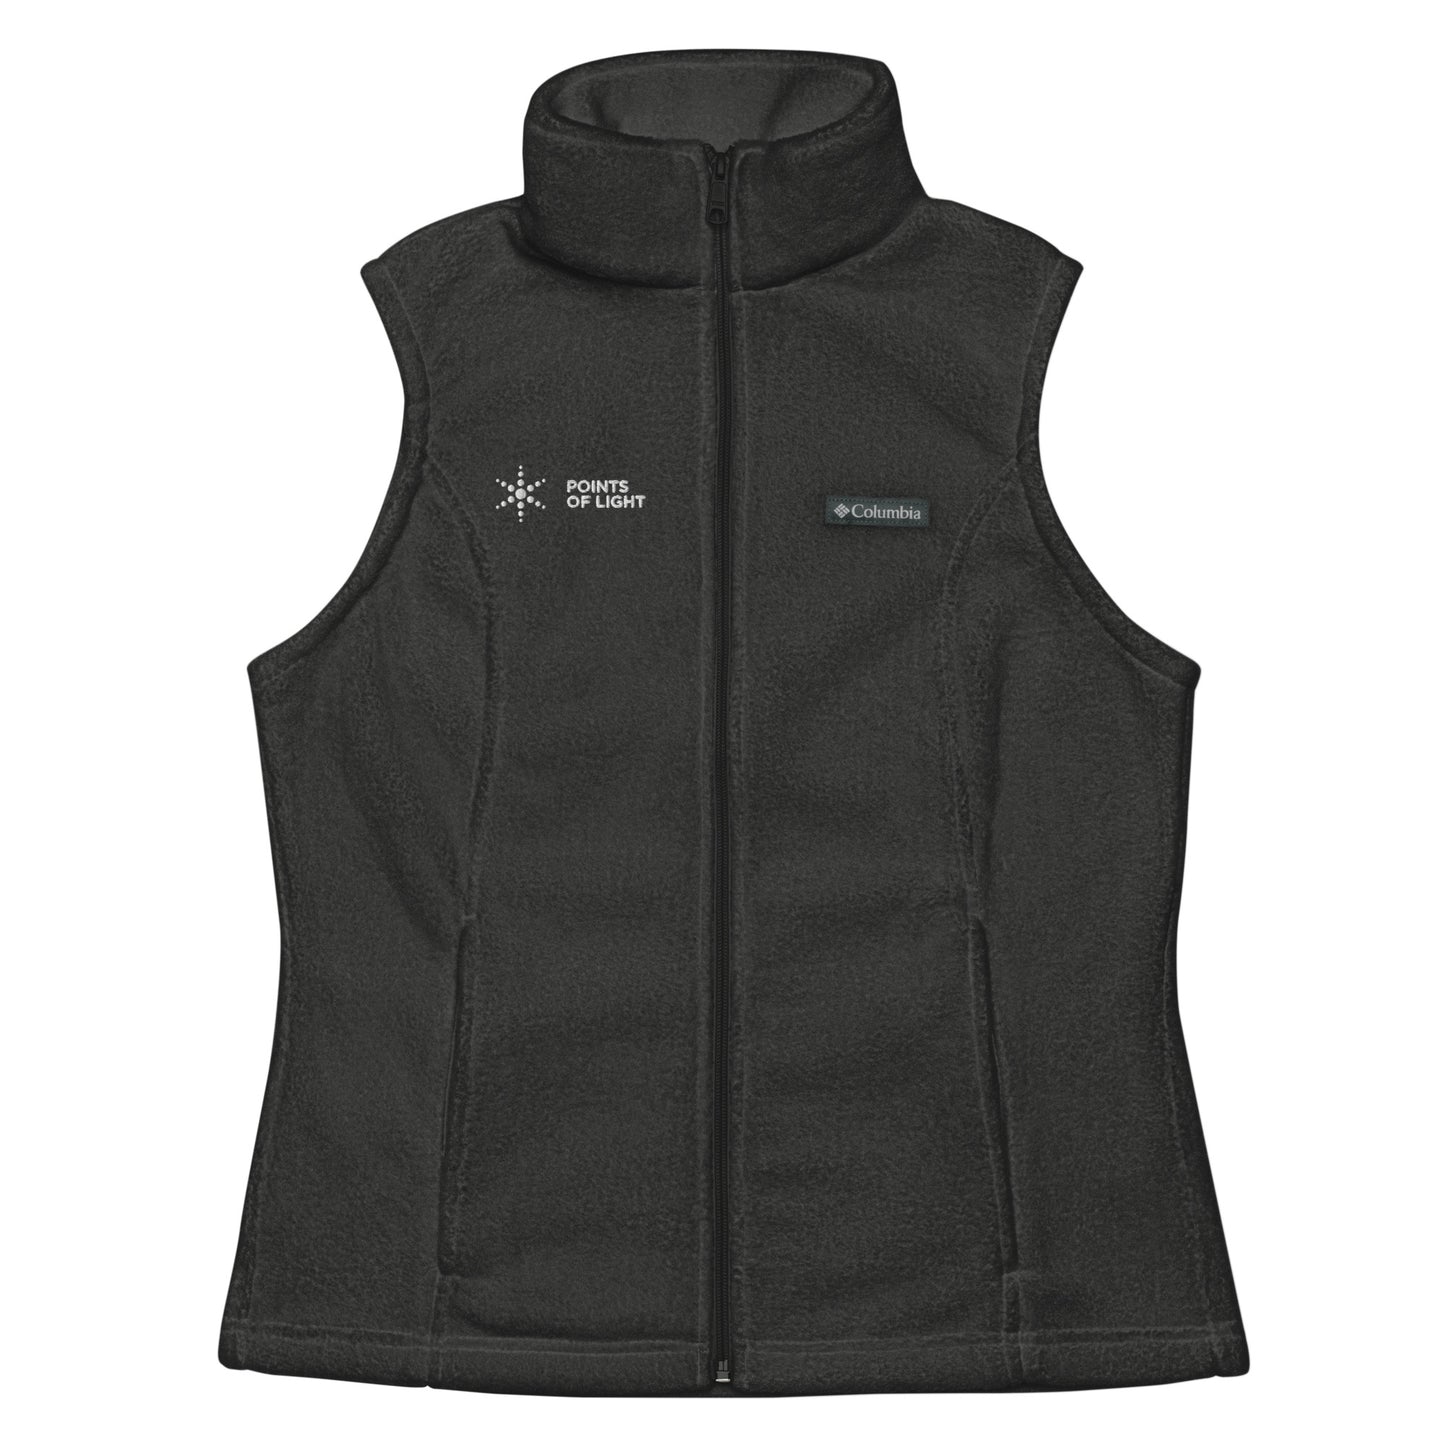 Points of Light Women’s Columbia fleece vest (Black, Charcoal Heather)